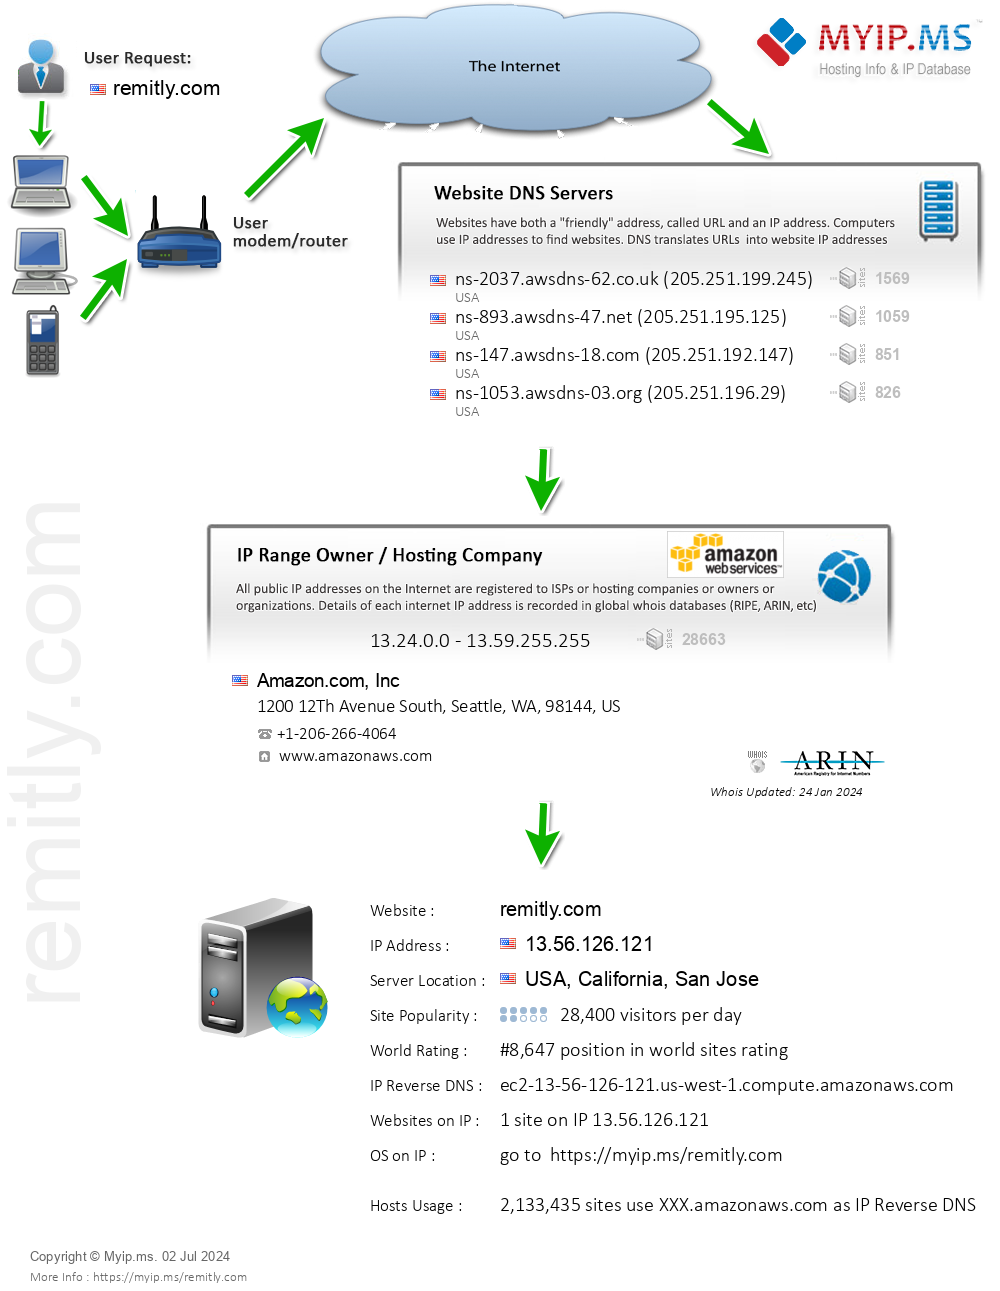 Remitly.com - Website Hosting Visual IP Diagram